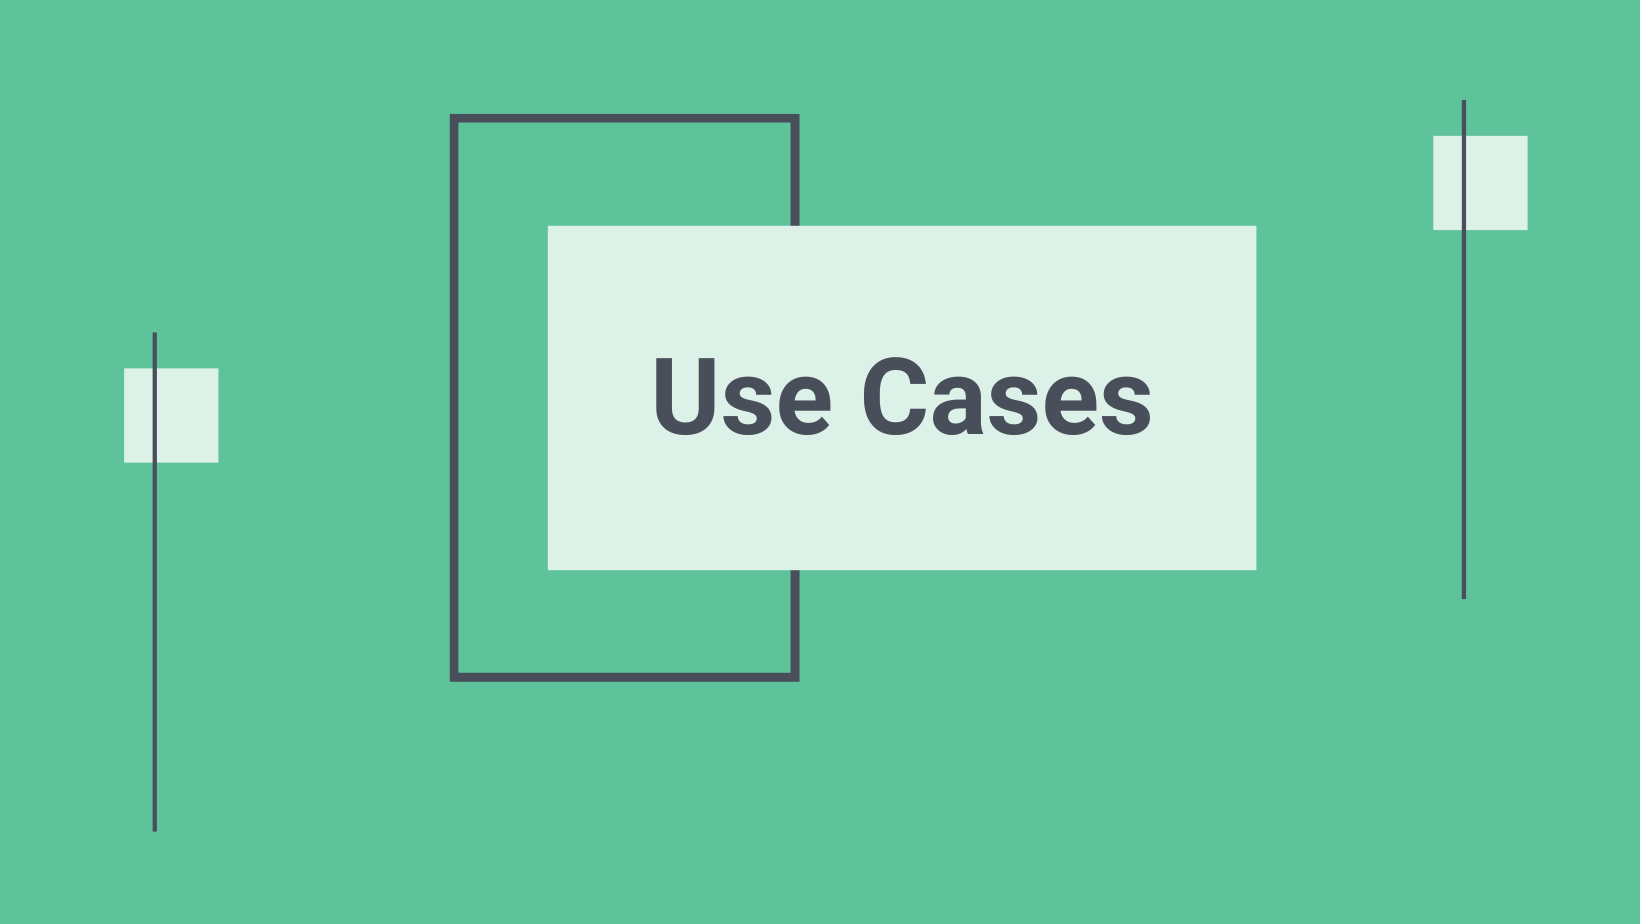 Software Hausverwaltung Use Cases